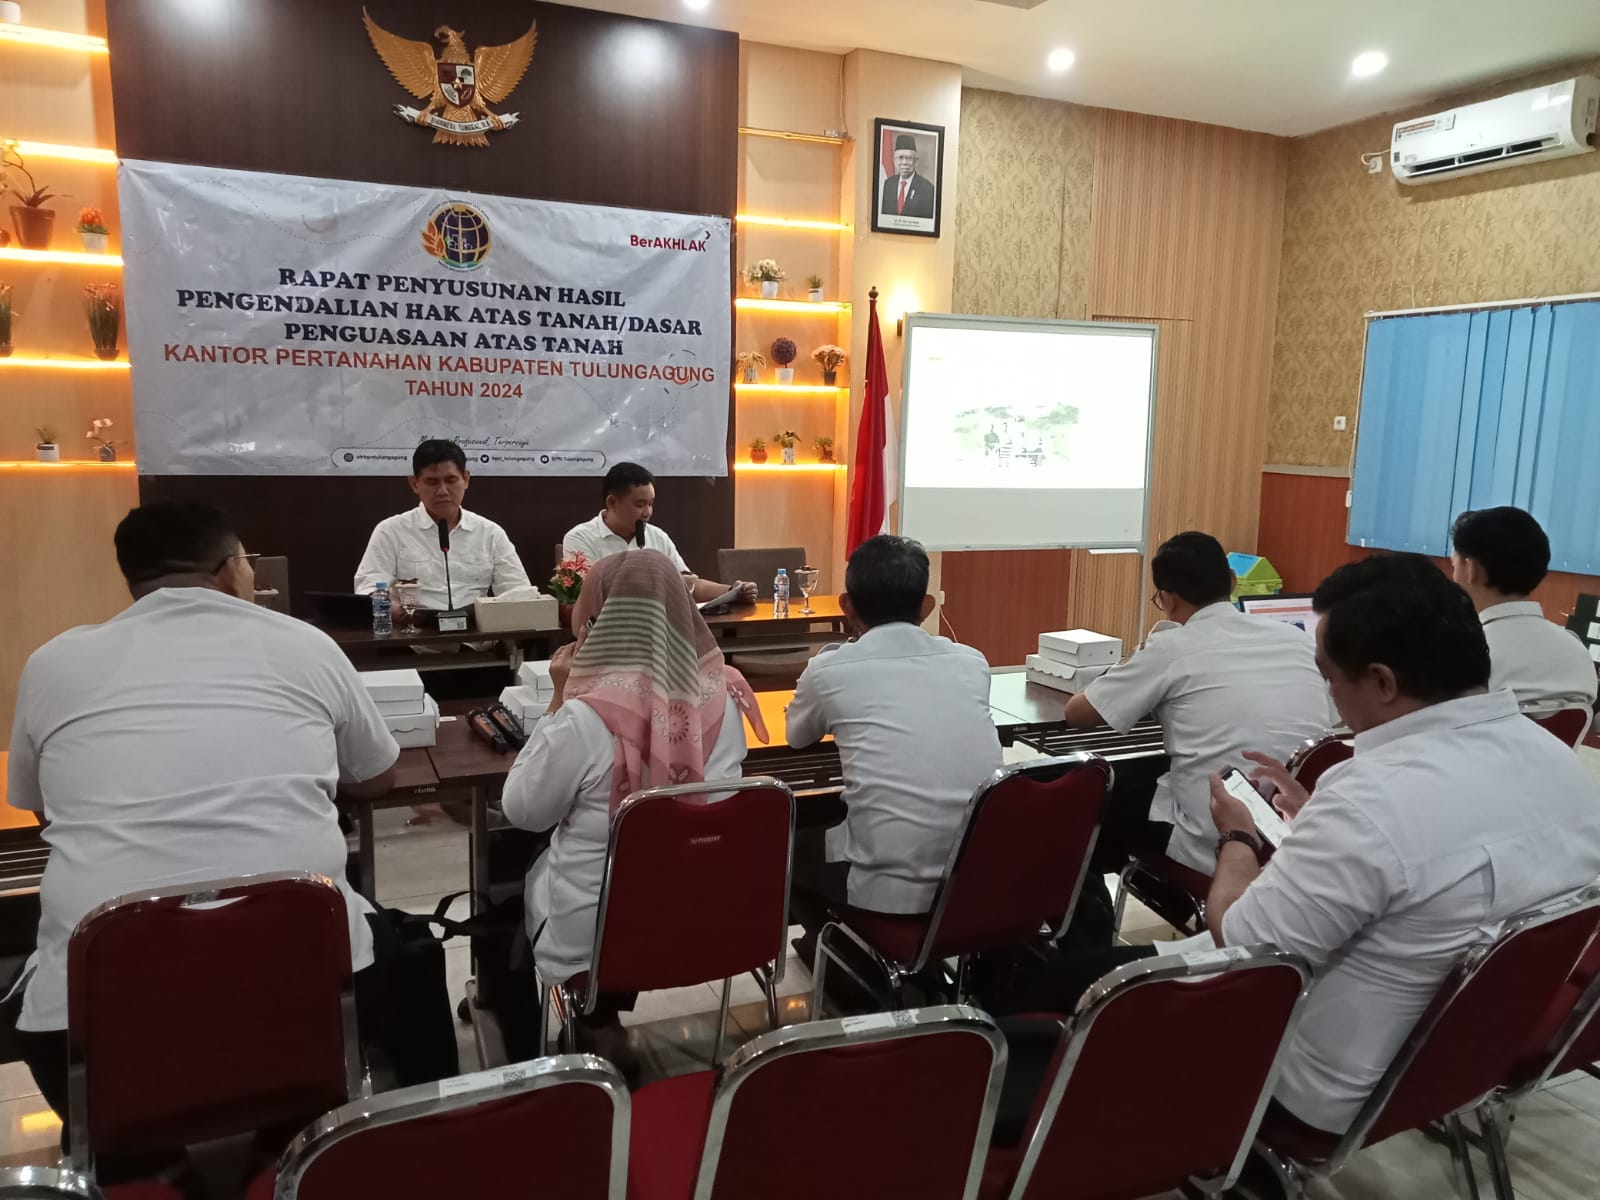 Kantah ATR/BPN Tulungagung Rapat Penyusunan Hasil Pengendalian Atas Tanah Bersama OPD Terkait